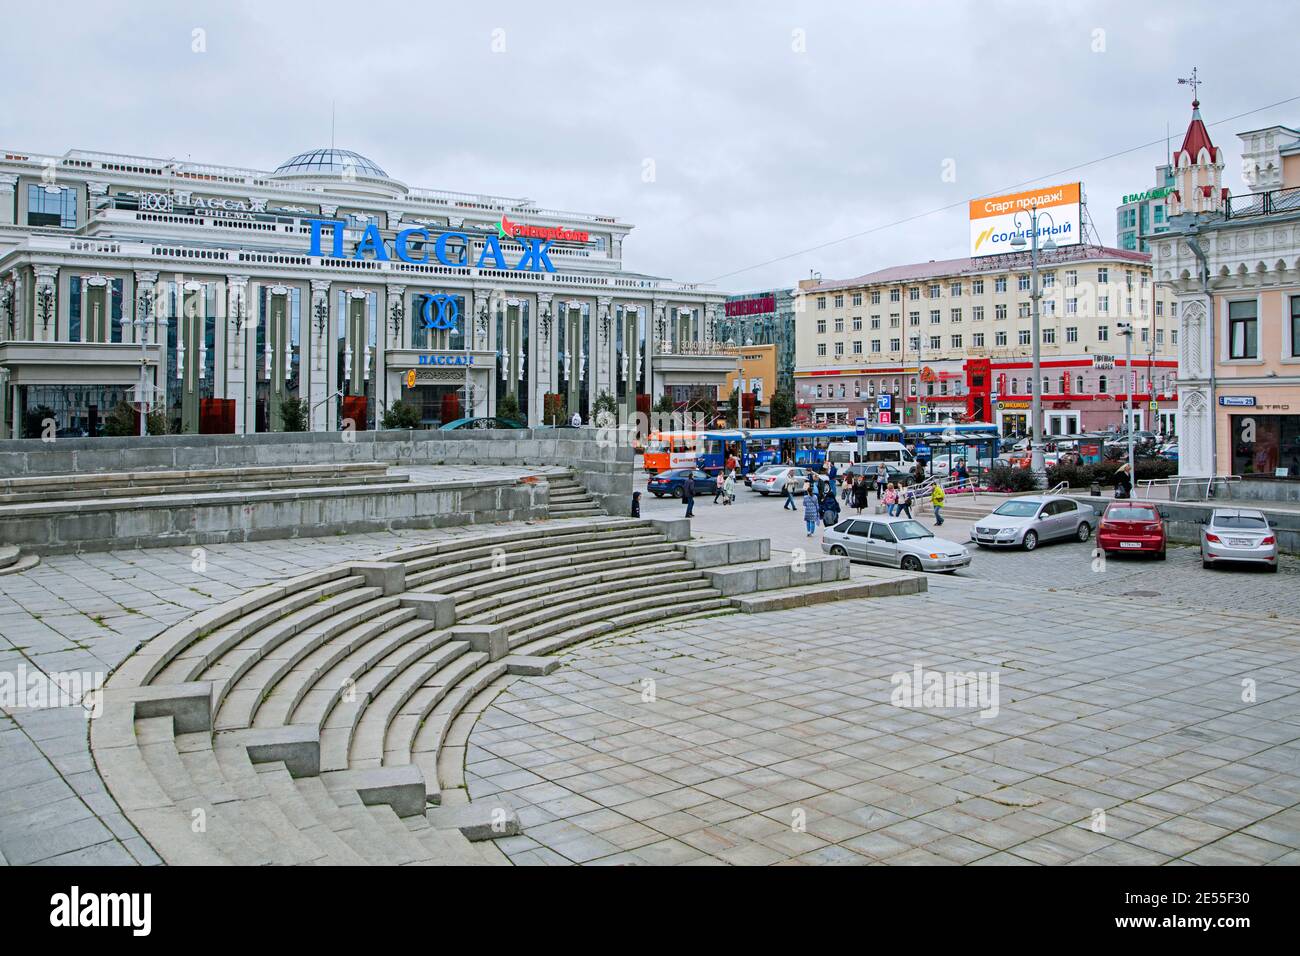 Passage shopping mall / Passazh shopping center in the city centre of Yekaterinburg, Sverdlovsk Oblast, Siberia, Russia Stock Photo